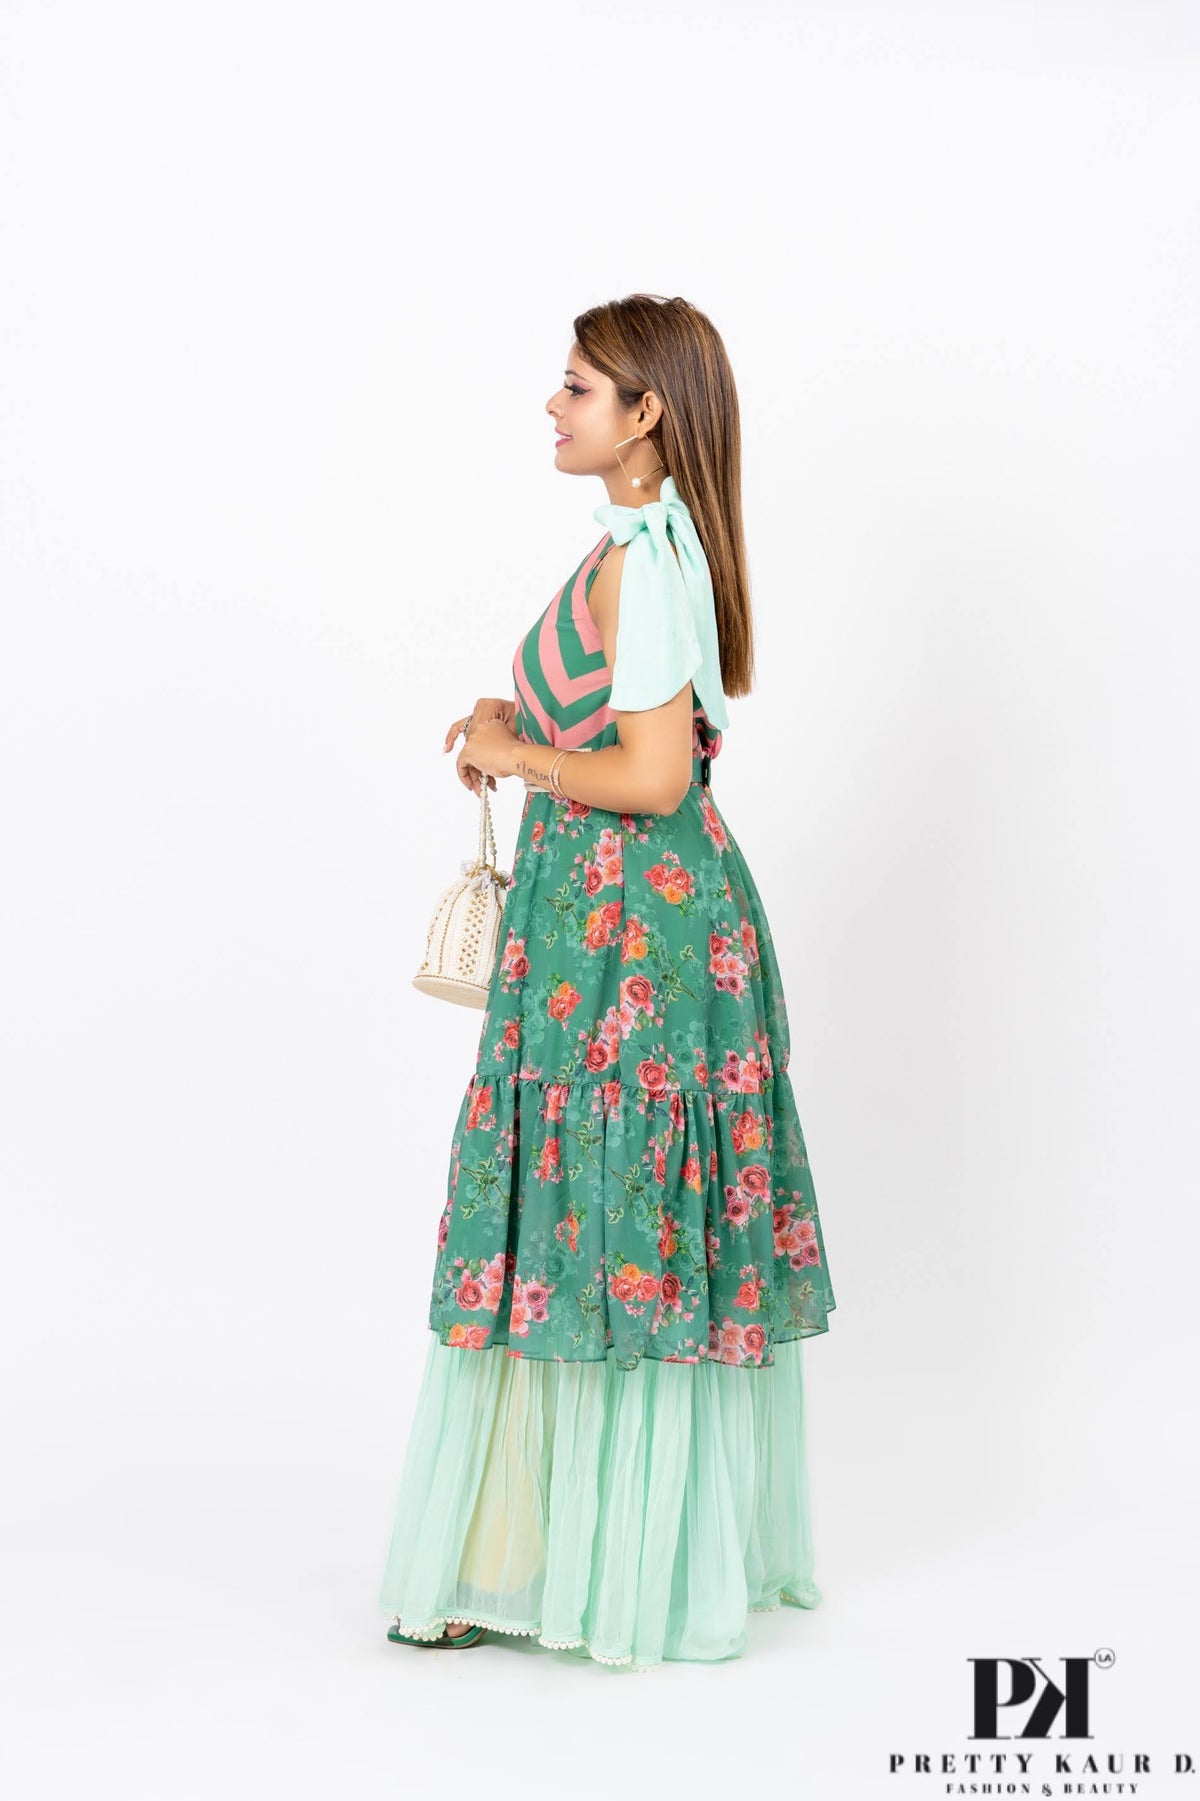 Pretty-Kaur-fashion-beauty-Green-Floral-Print-Off-Shoulder-Dress-2